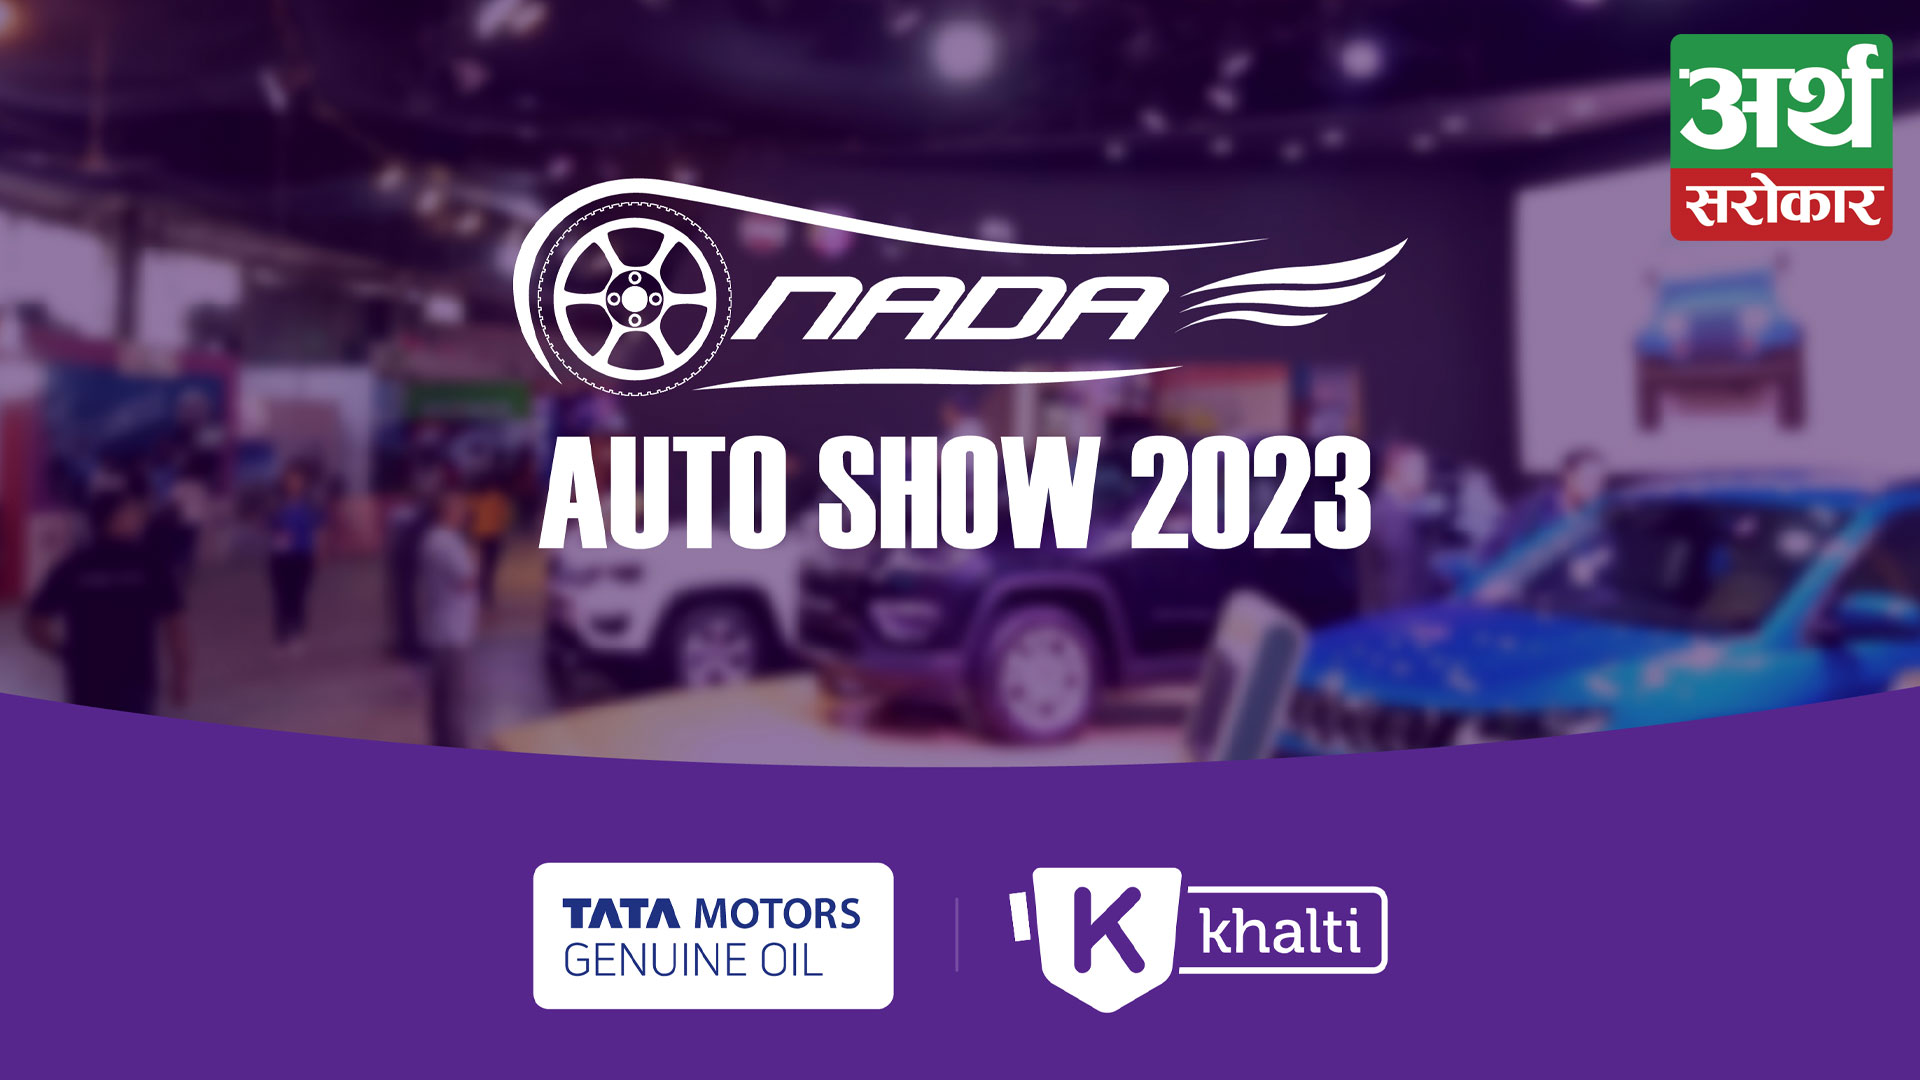 Khalti partners with ‘NADA Auto Show 2023’ as an ticketing partner providing 20% Cashback